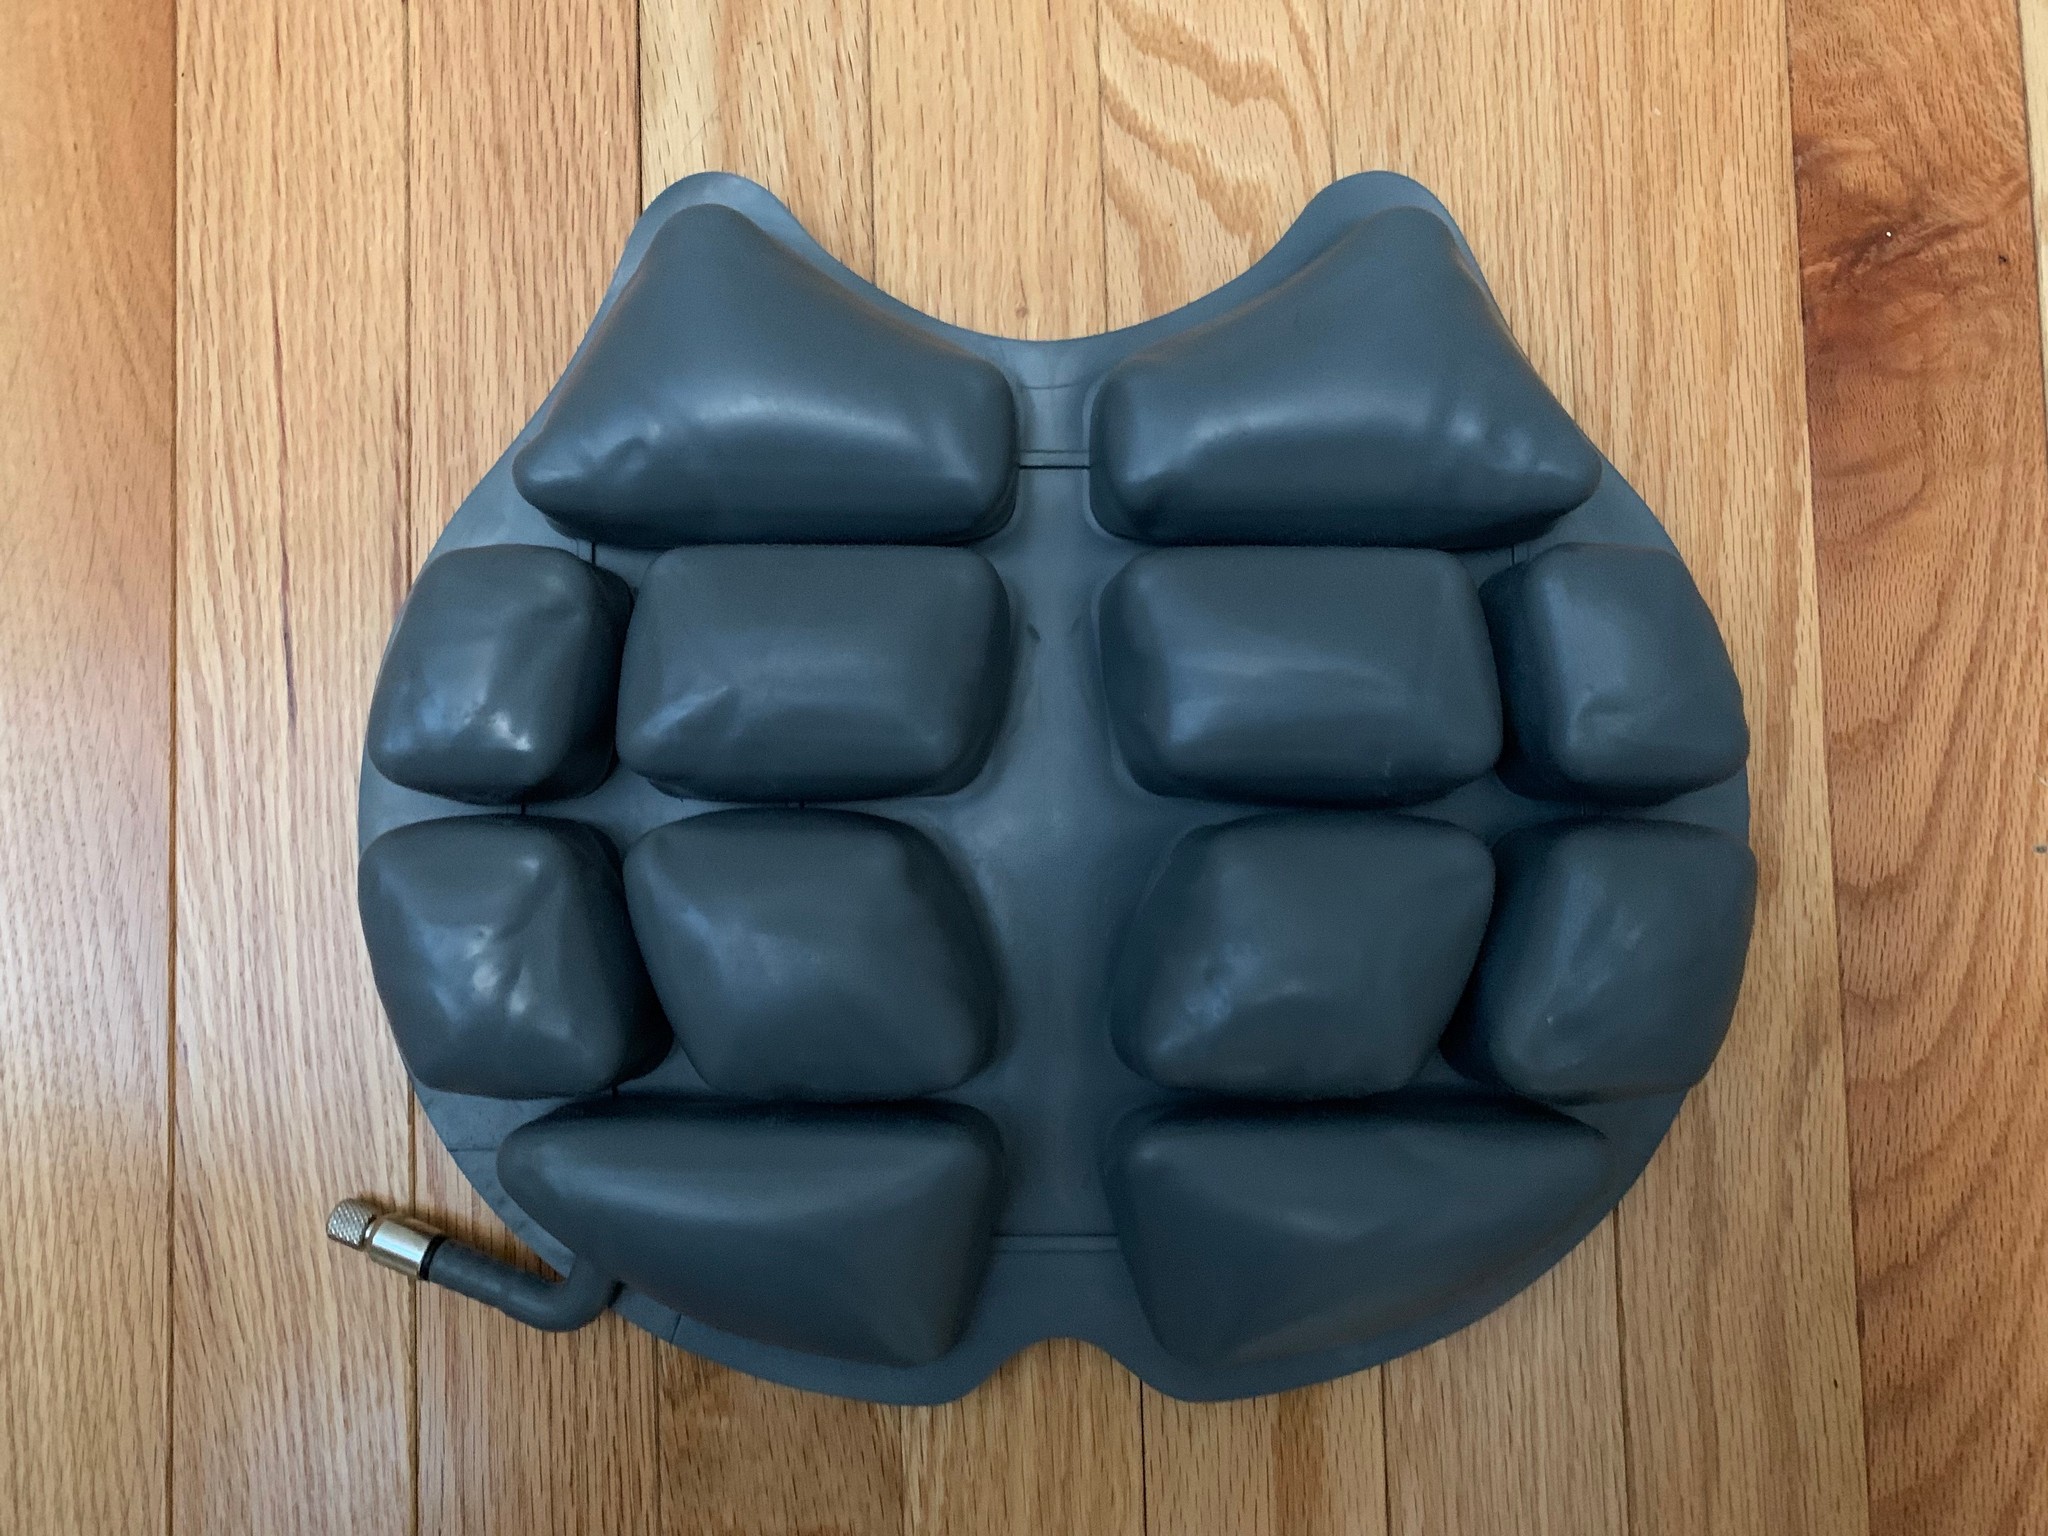 The neoprene cushion